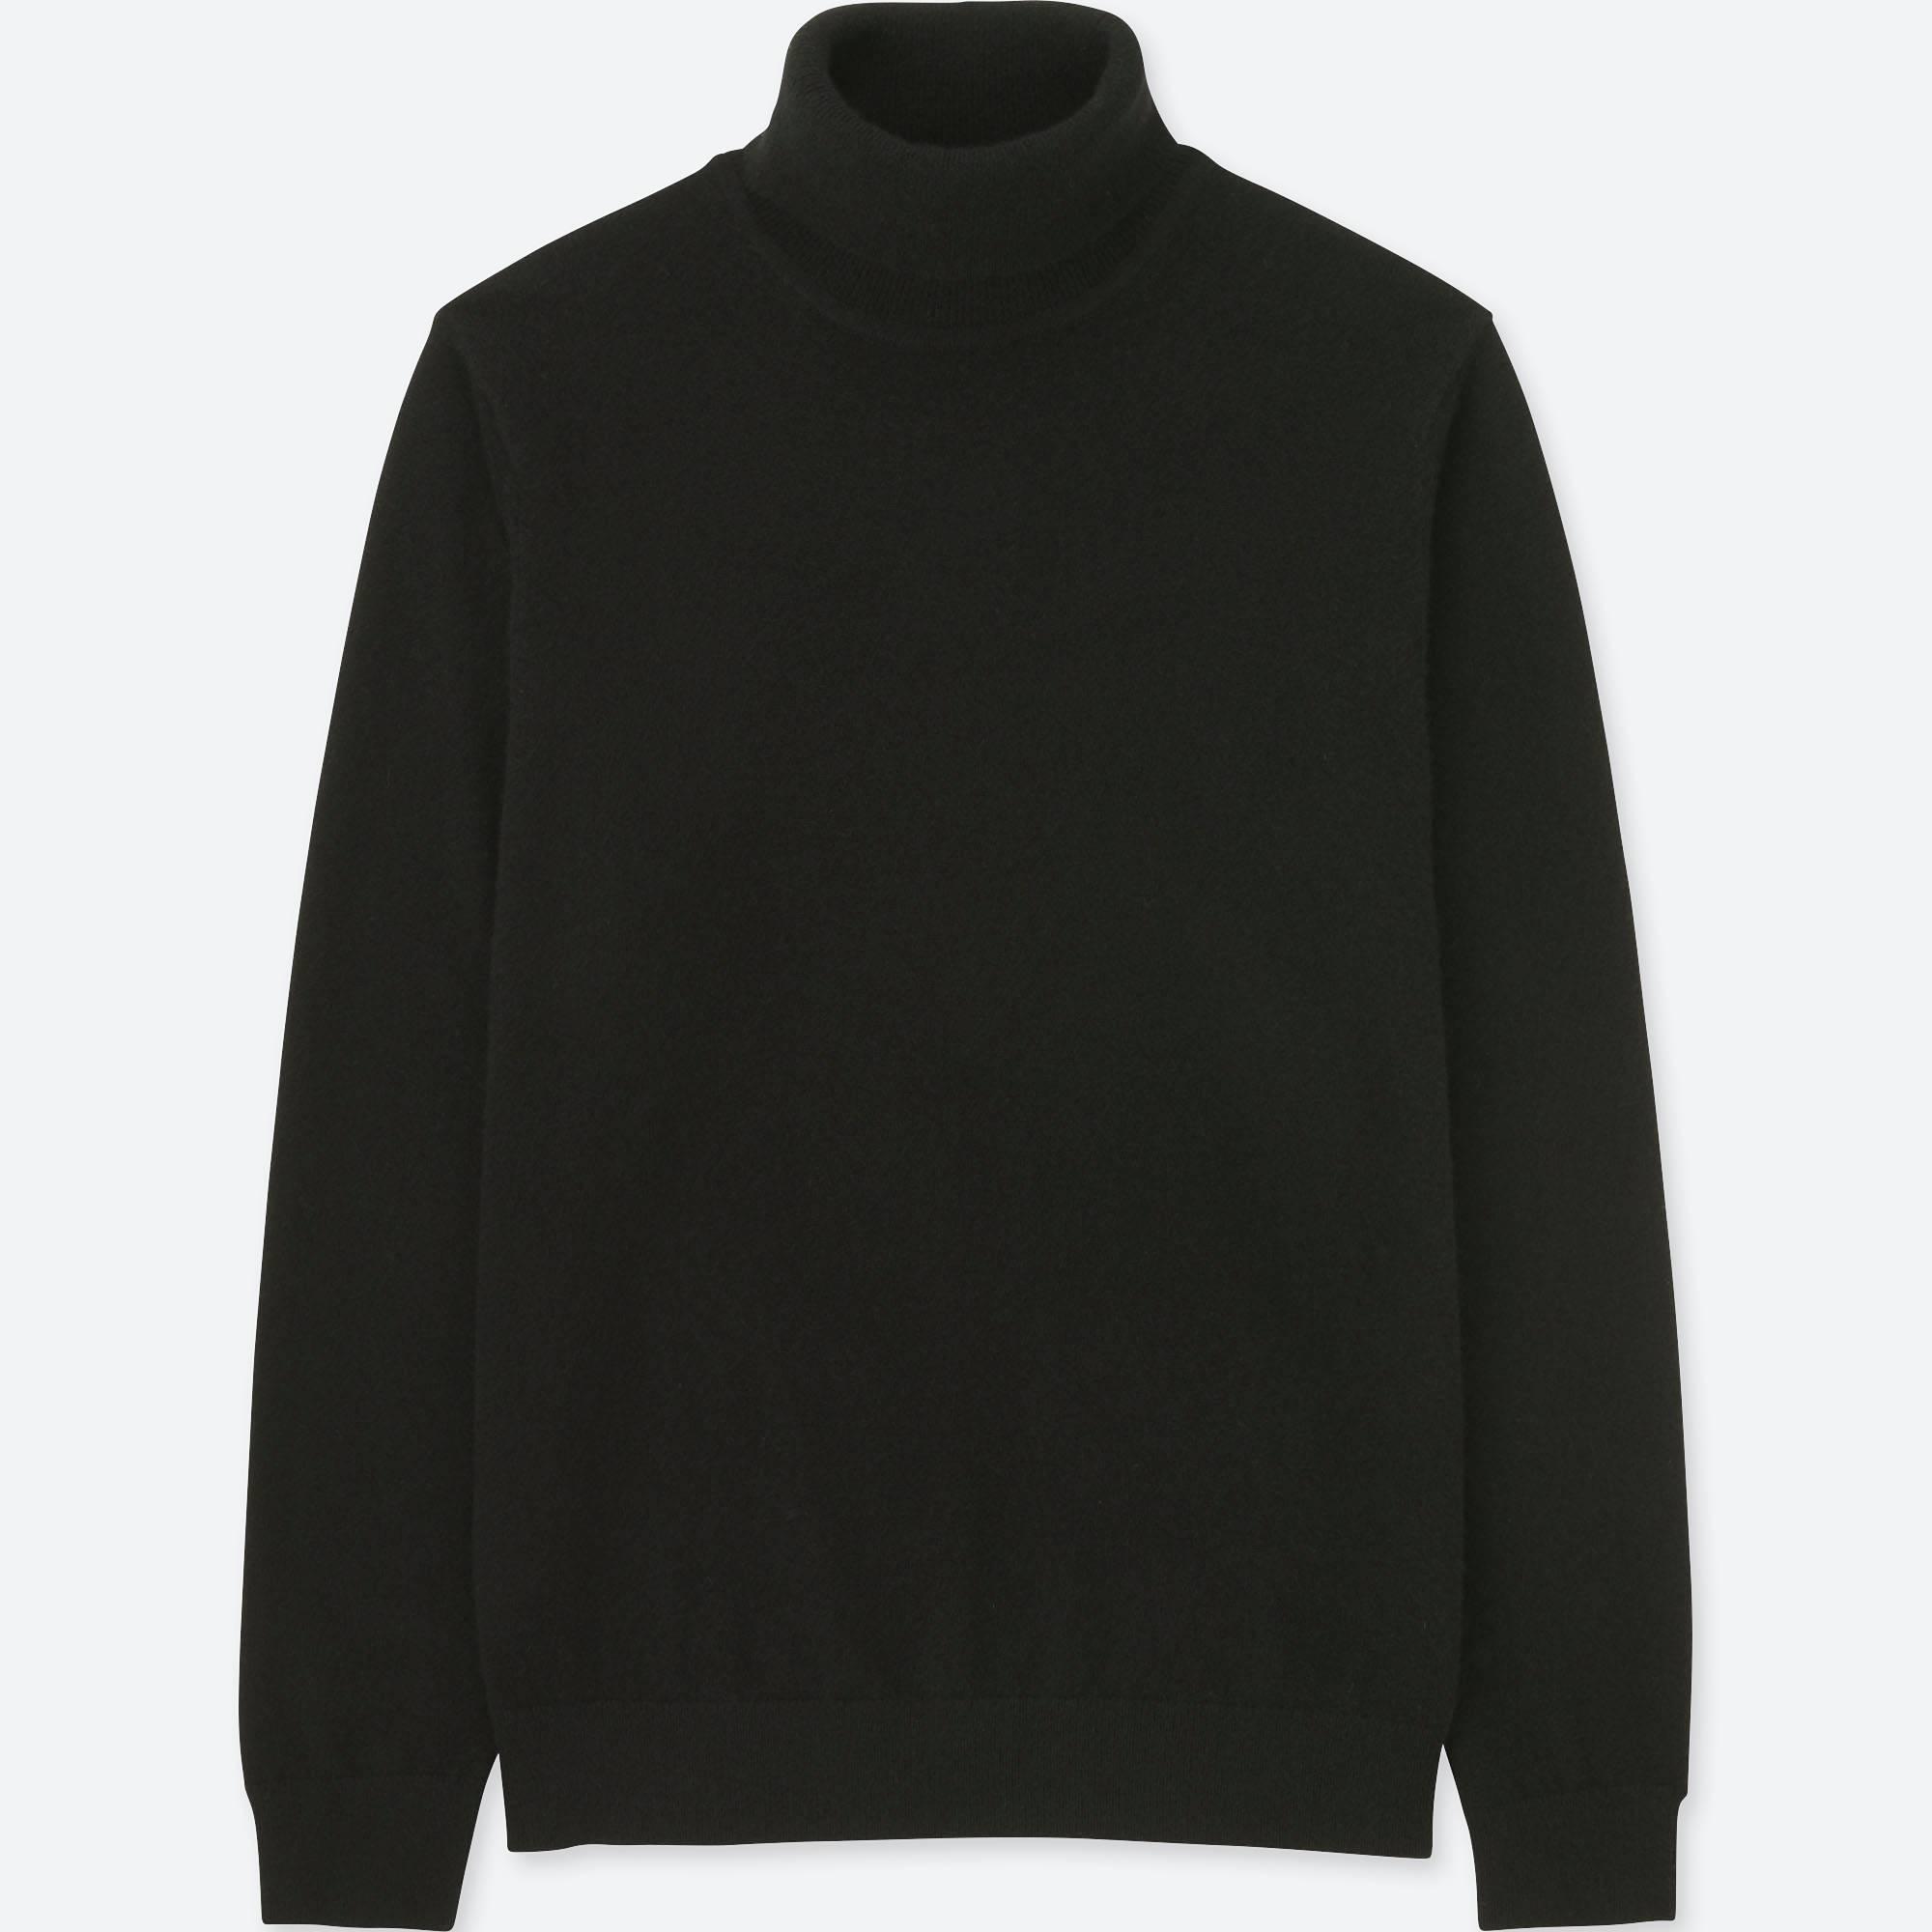 Lyst - Uniqlo Men Cashmere Turtleneck Long-sleeve Sweater in Black for Men